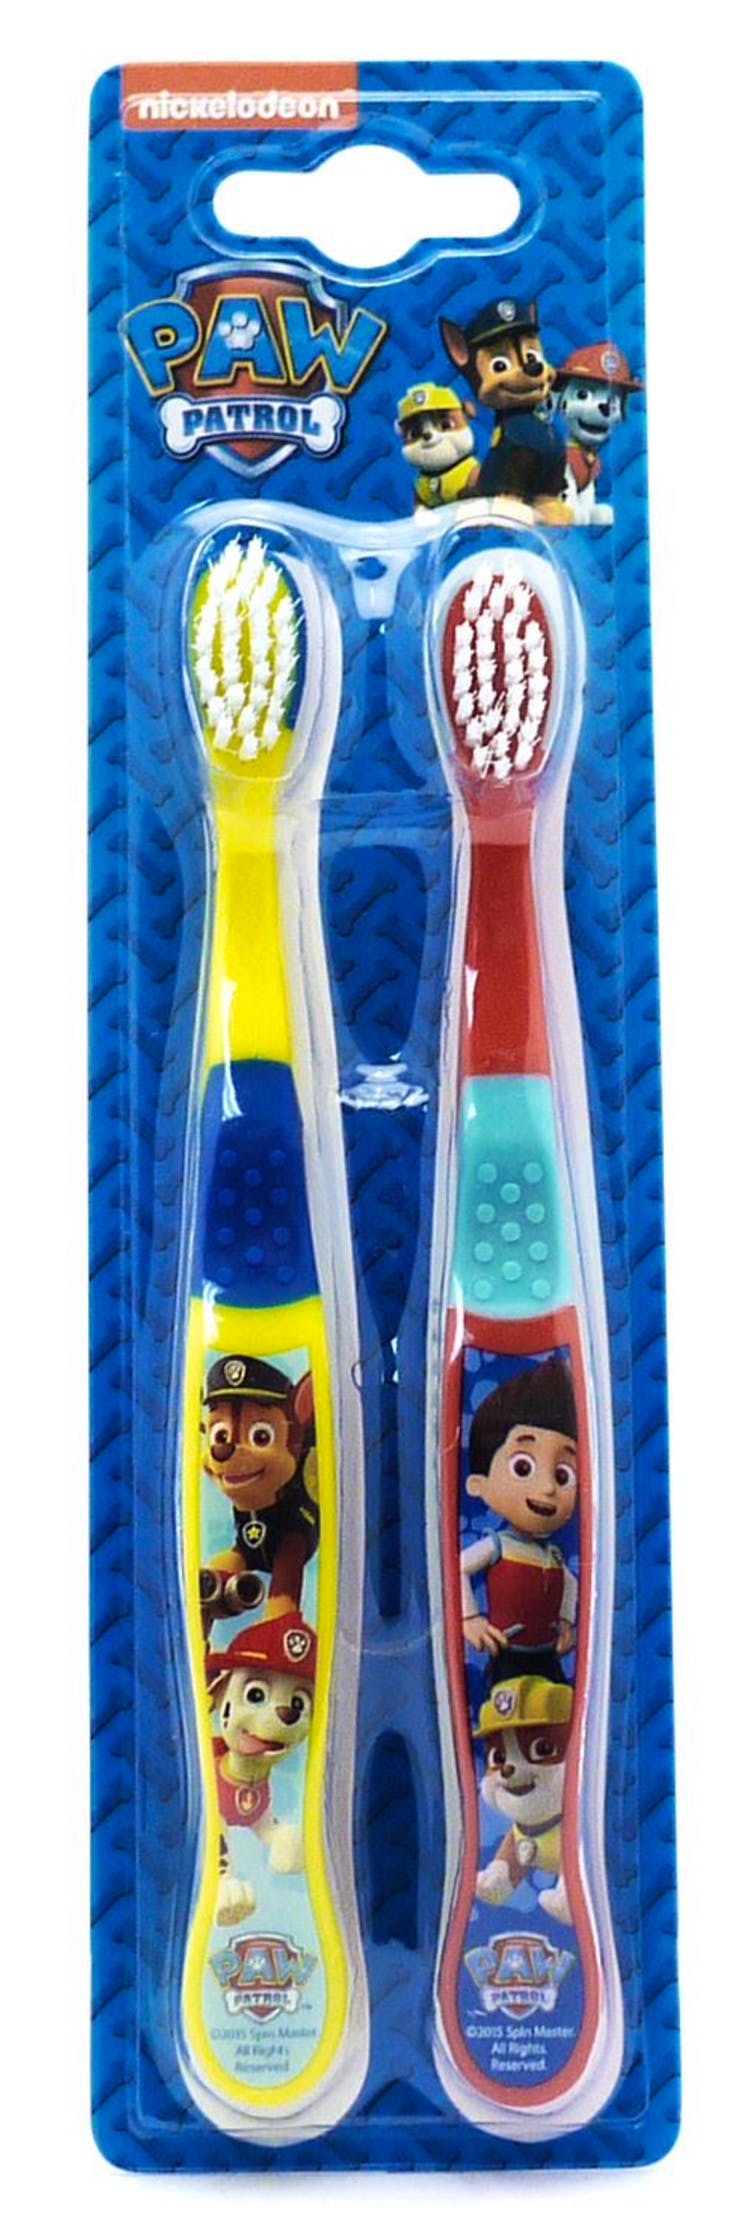 Nickelodeon Paw Patrol Toothbrush Duo 2 stk 13.95 kr